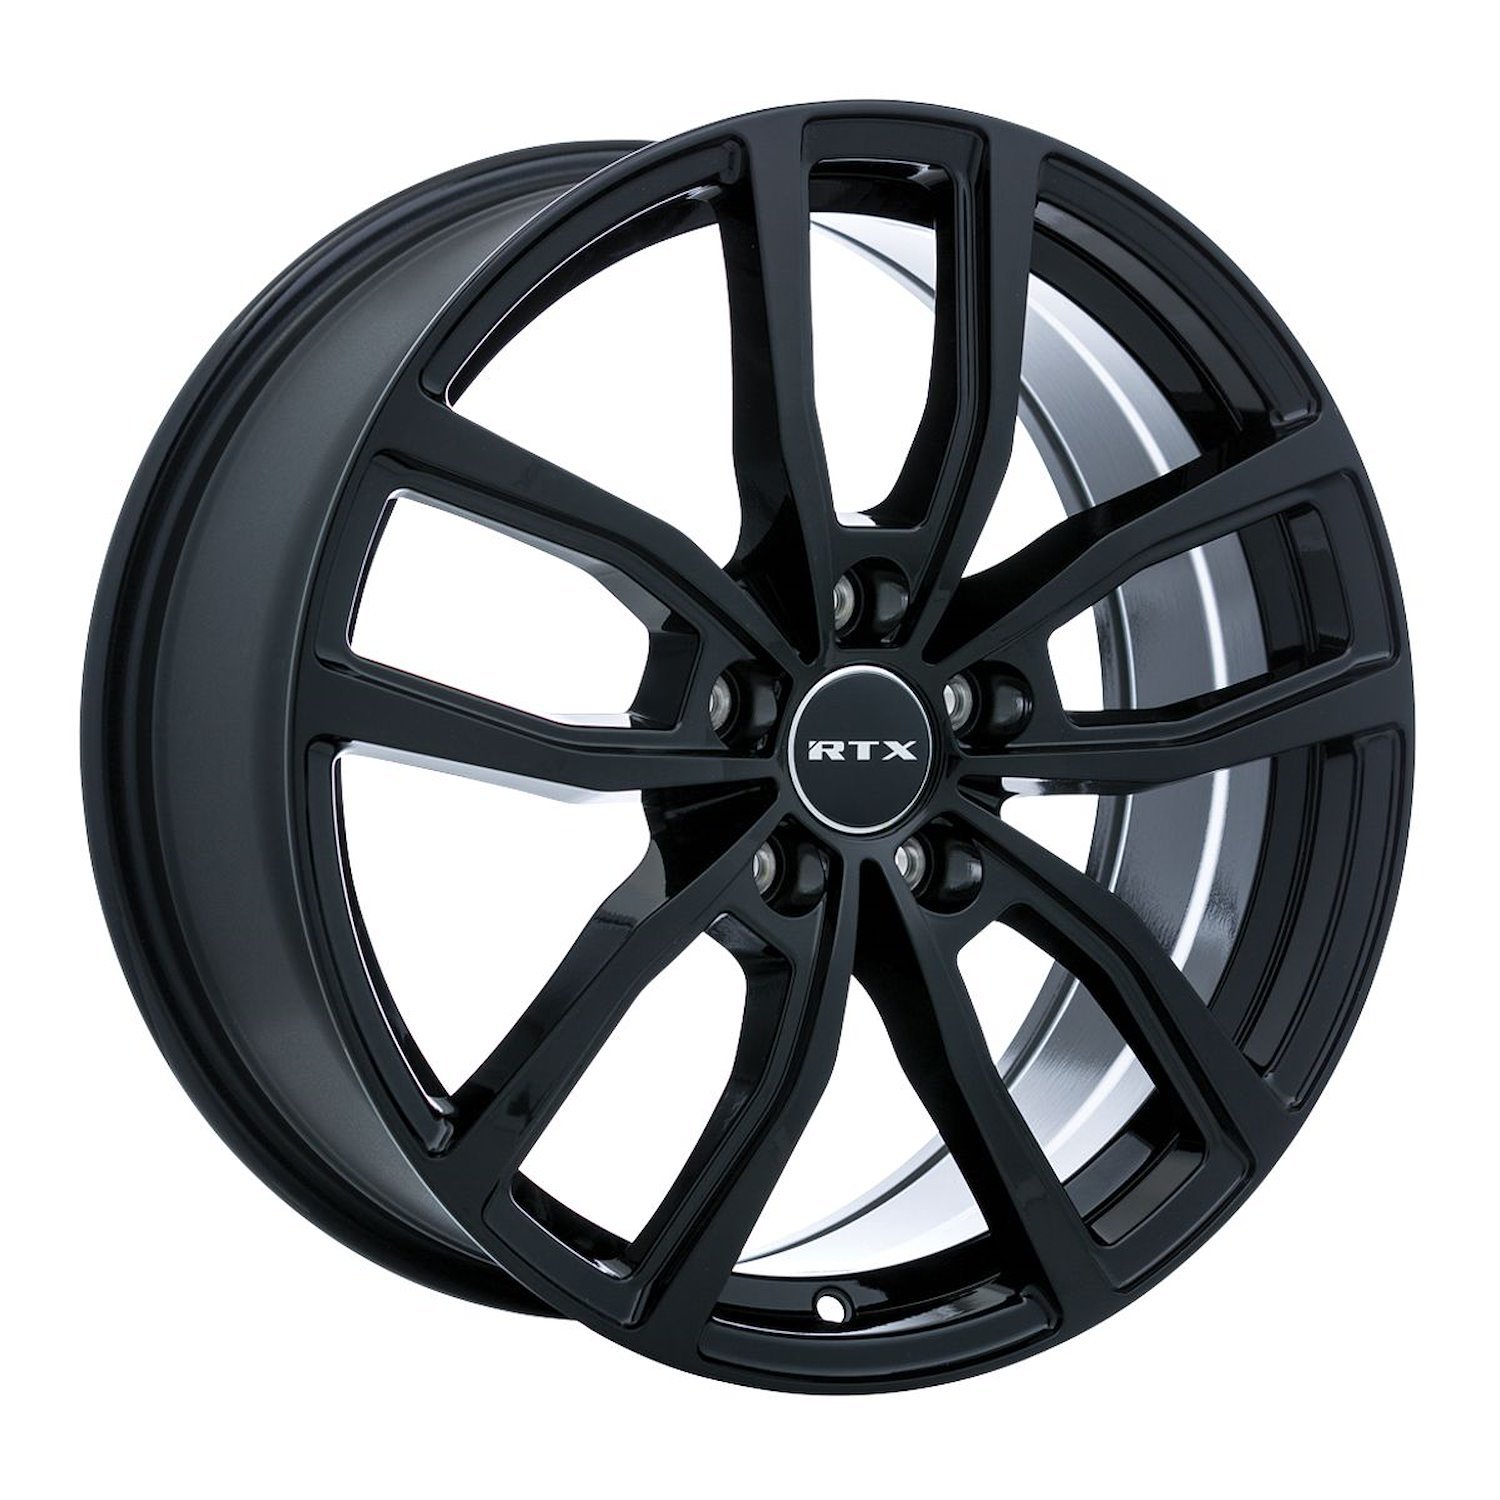 163705 RTX-Series Solstice Wheel [Size: 17" x 7"] Gloss Black Finish